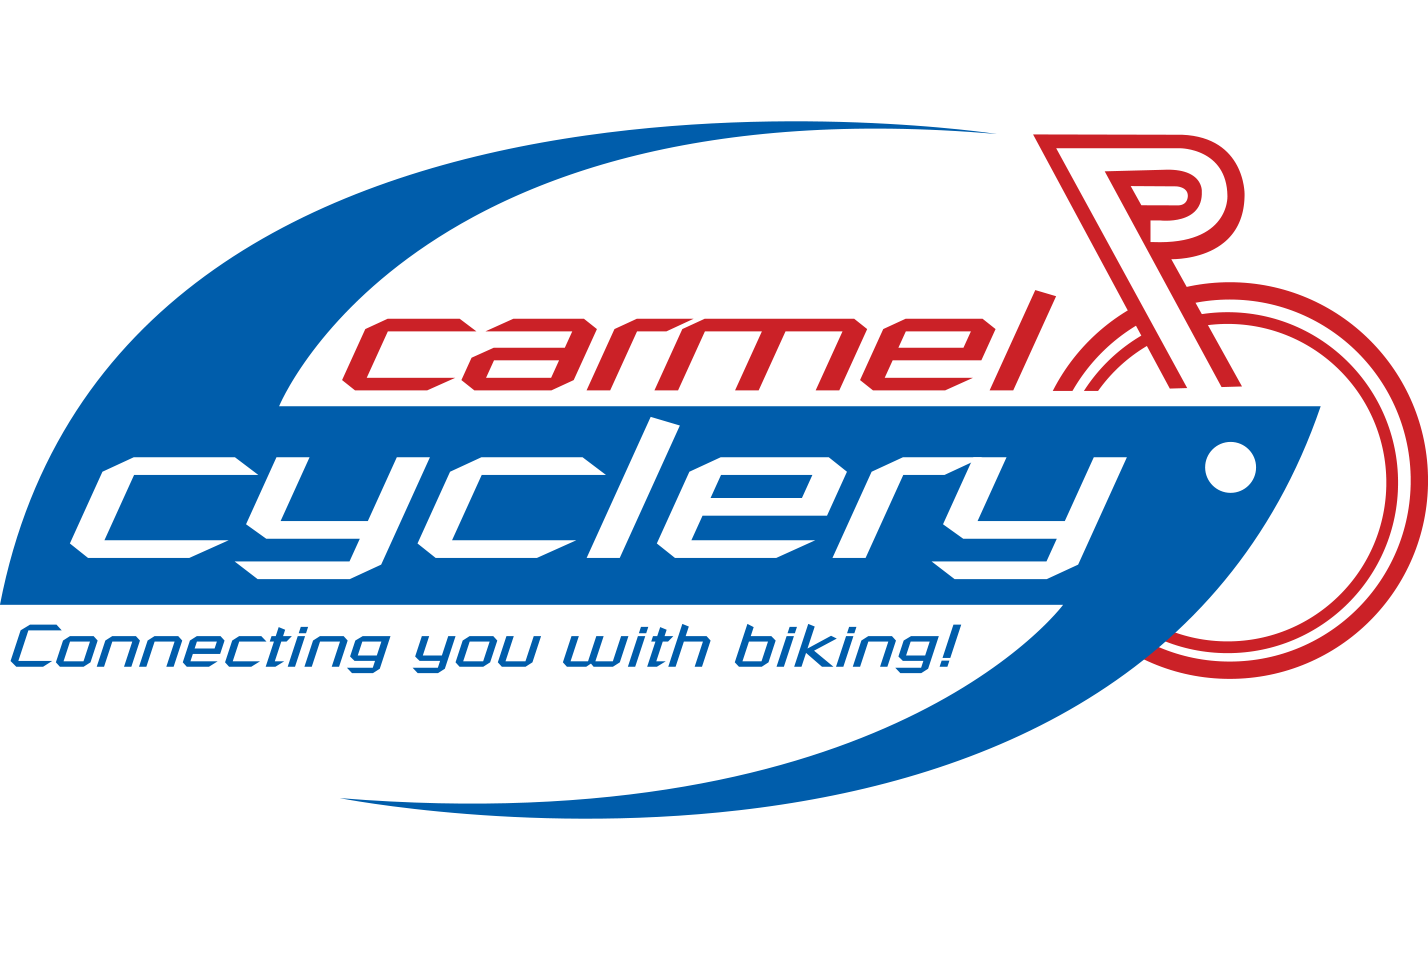 The Carmel Cyclery